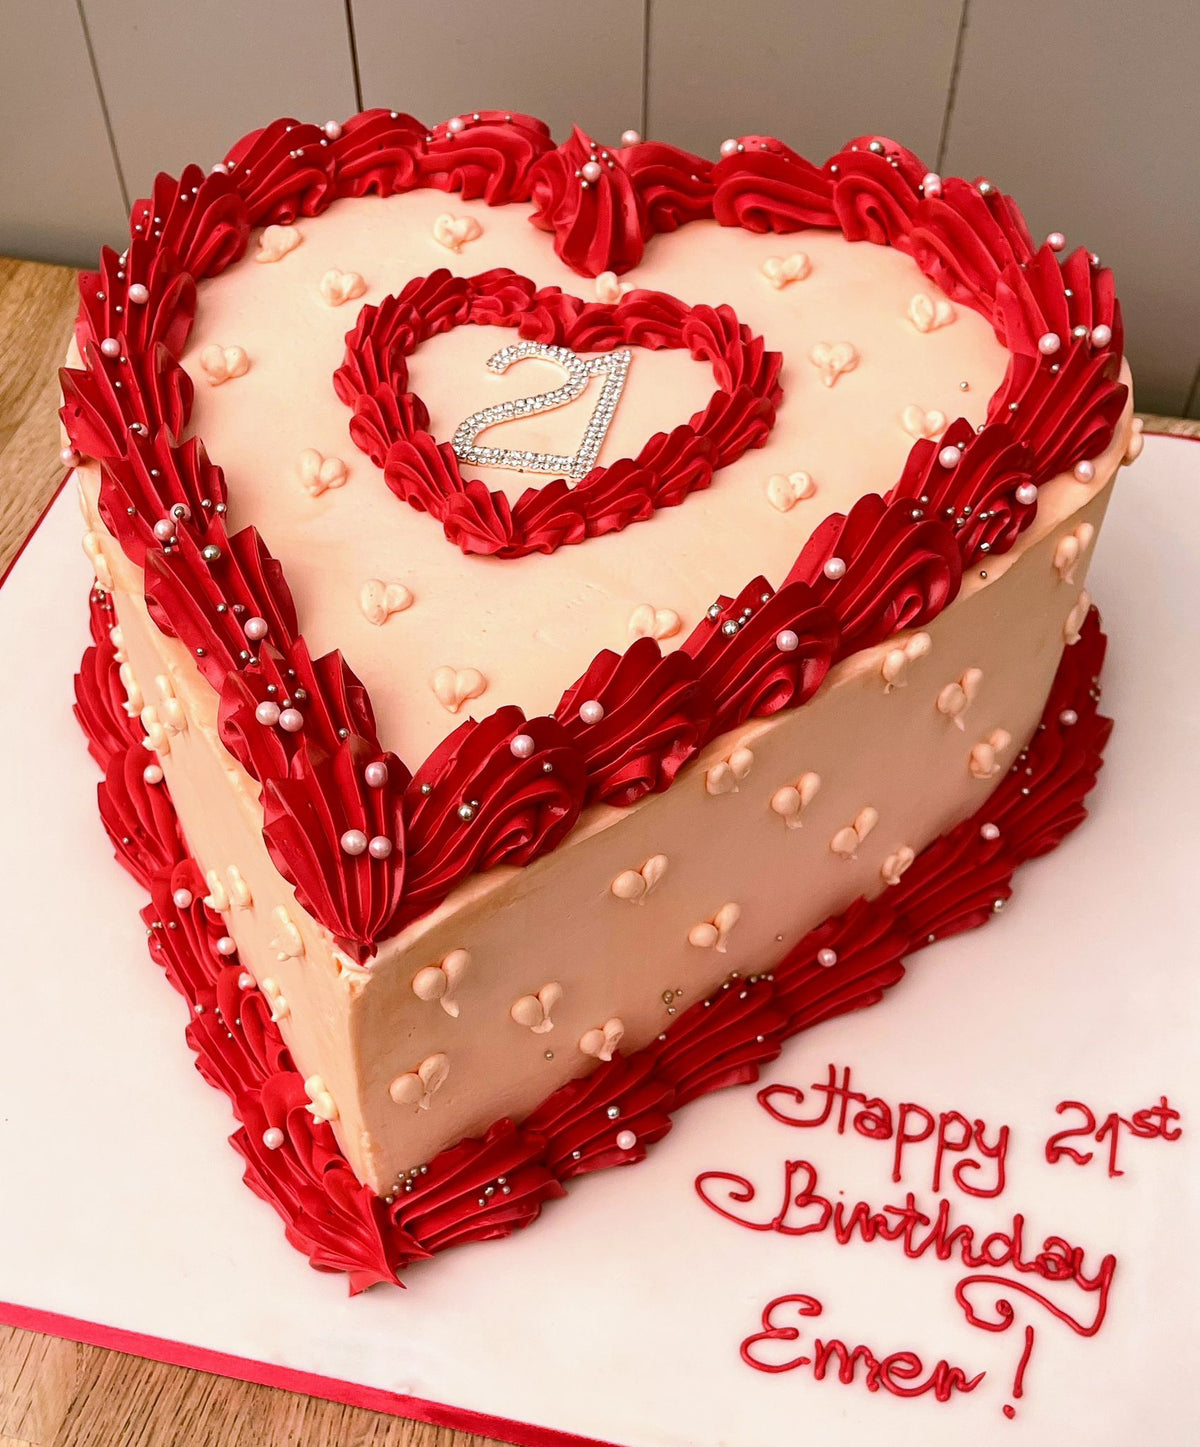 Kiran's B'day Cake - Close up | Yanesh Tyagi | Flickr